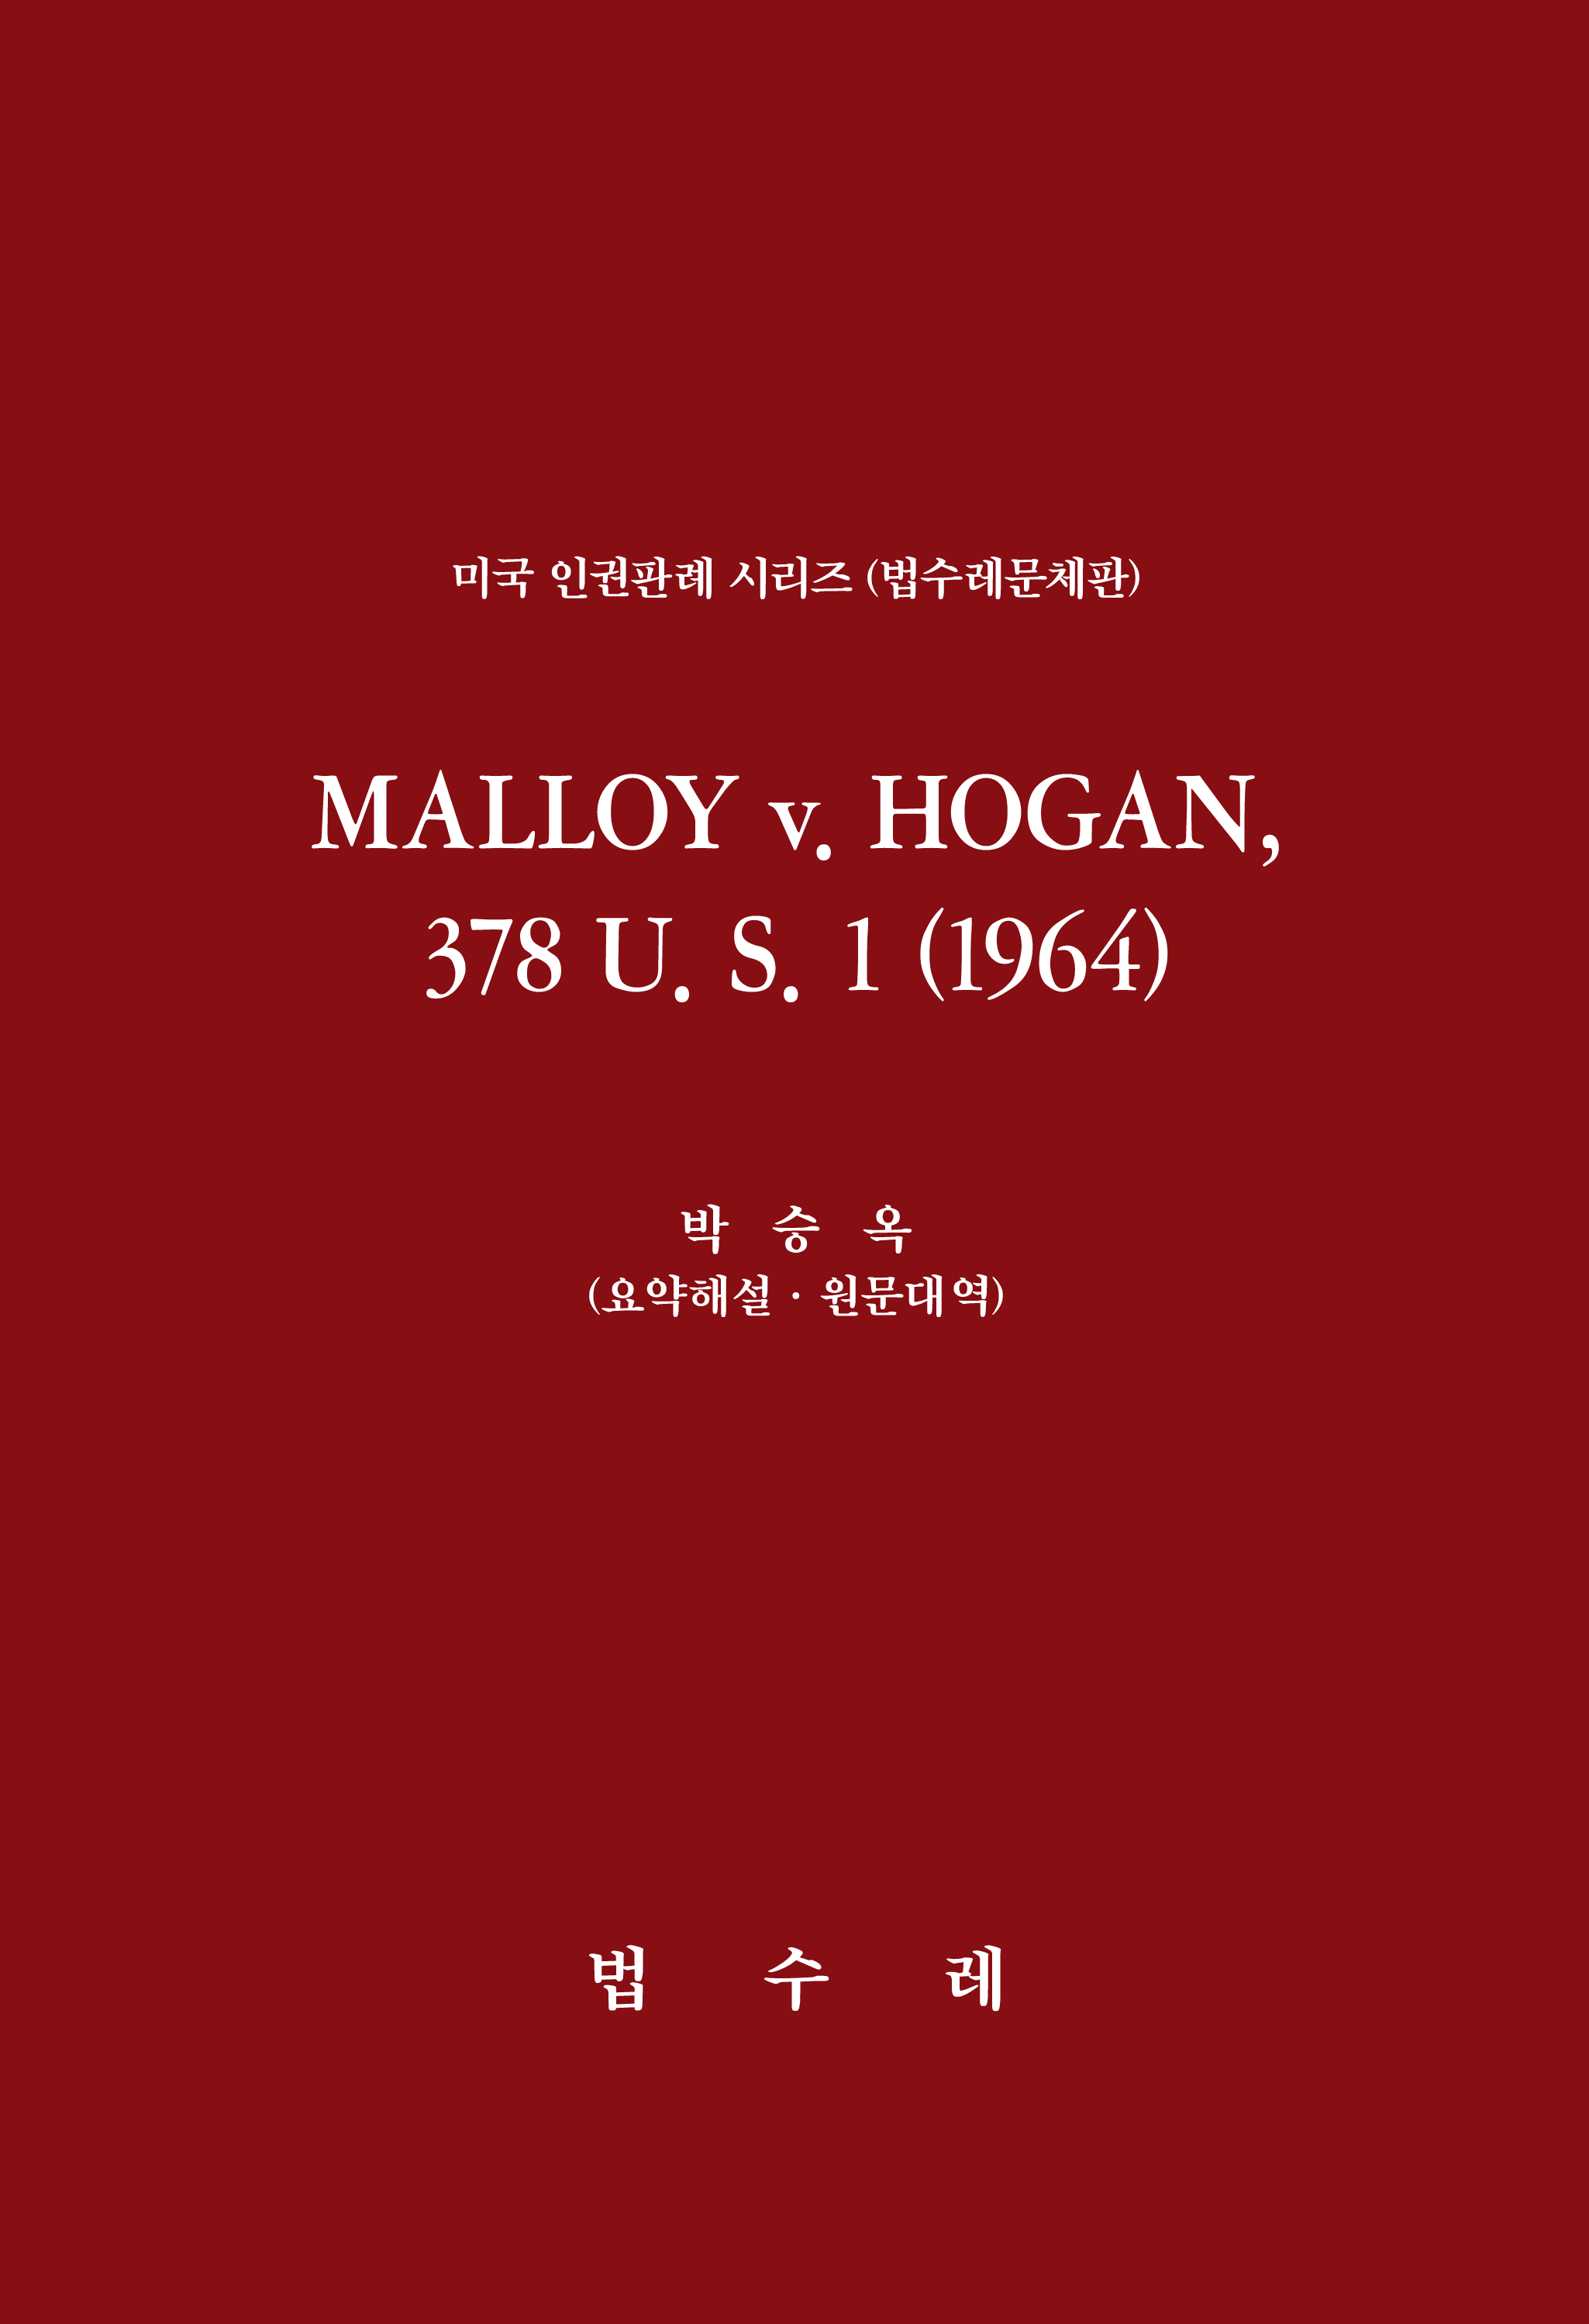 MALLOY v. HOGAN, 378 U. S. 1 (1964)